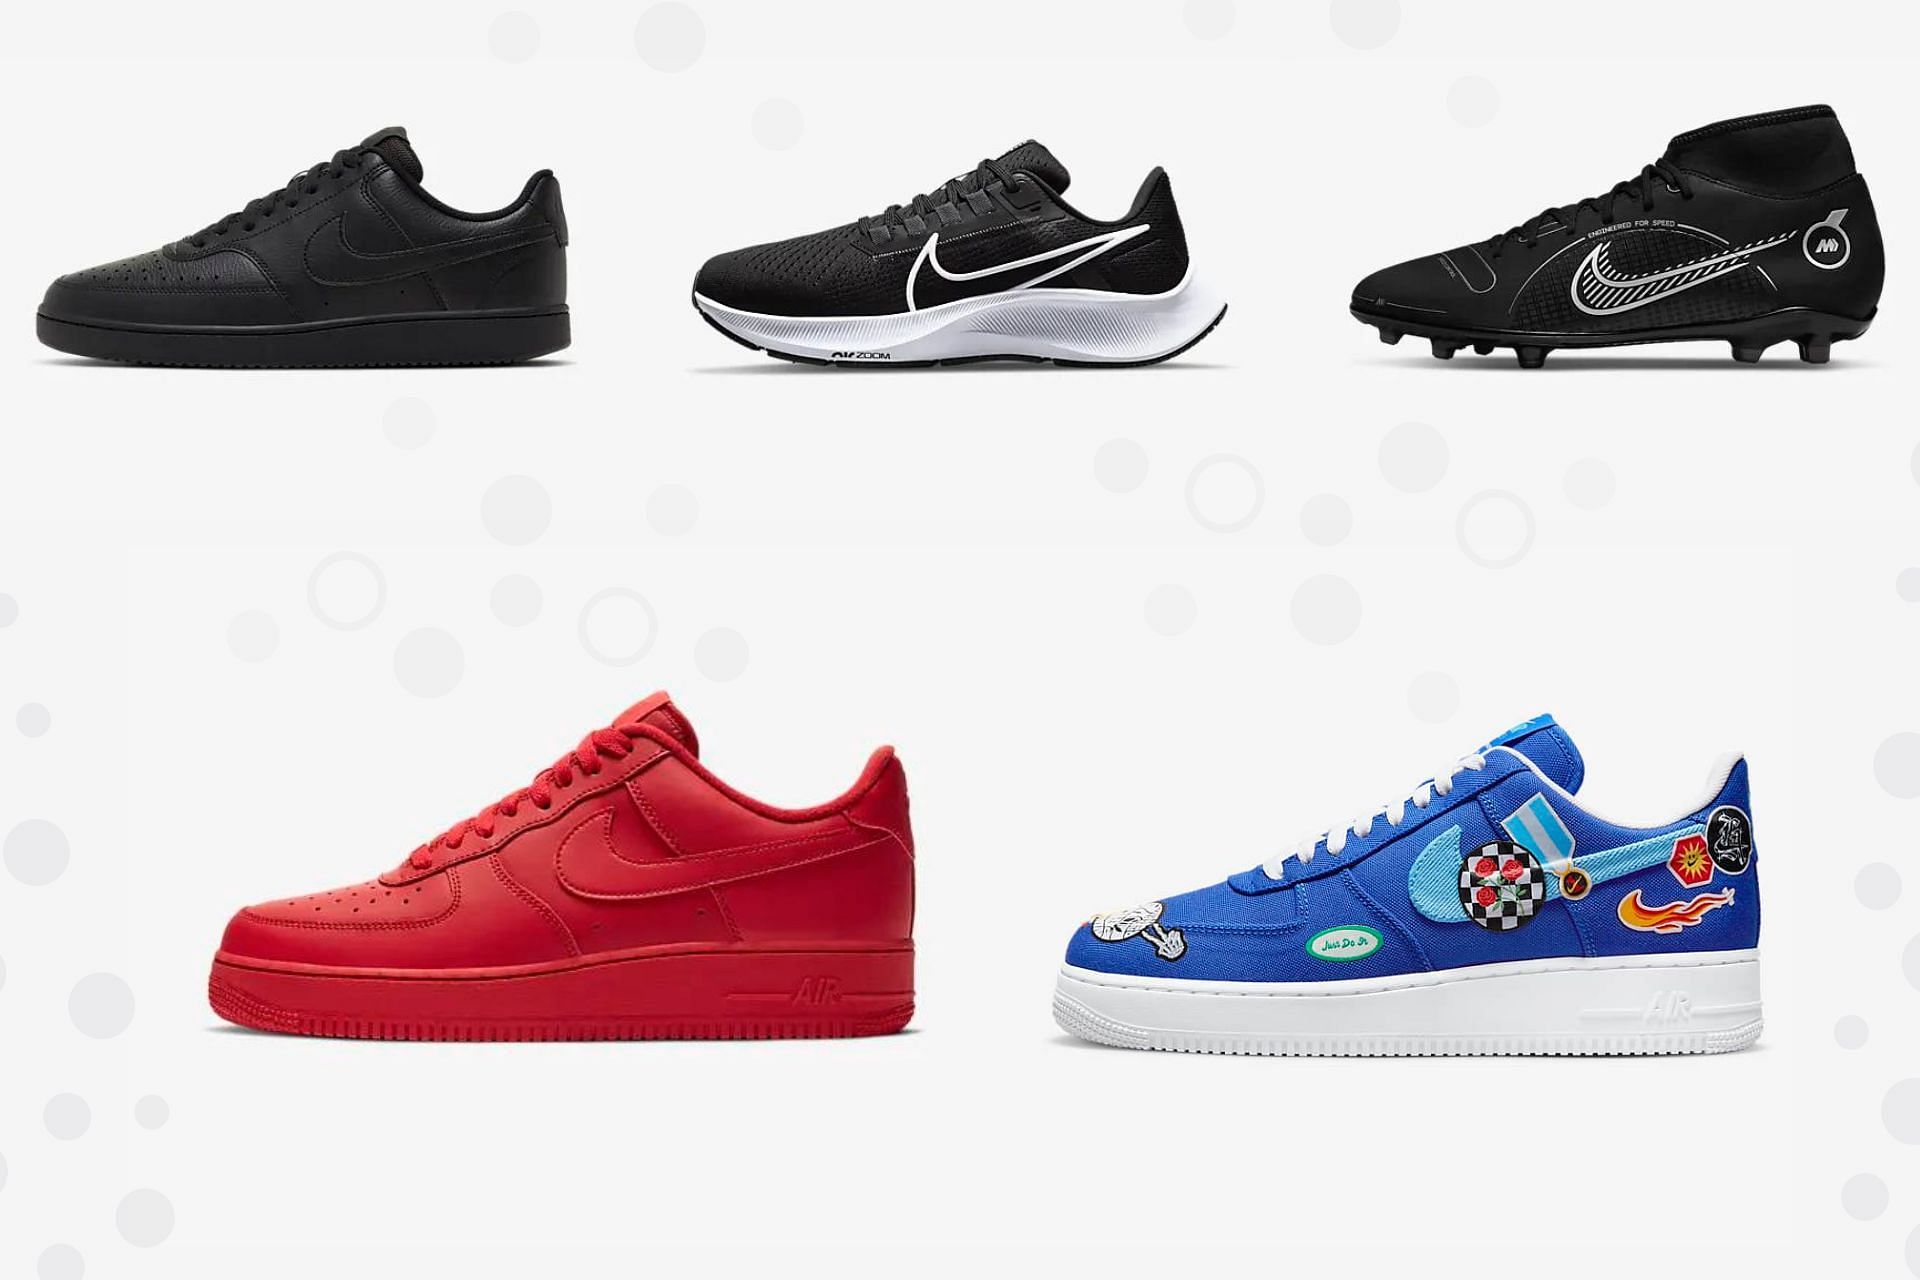 Five Nike kicks on sale for sneakerheads that are not be missed! (Image via Sportskeeda)